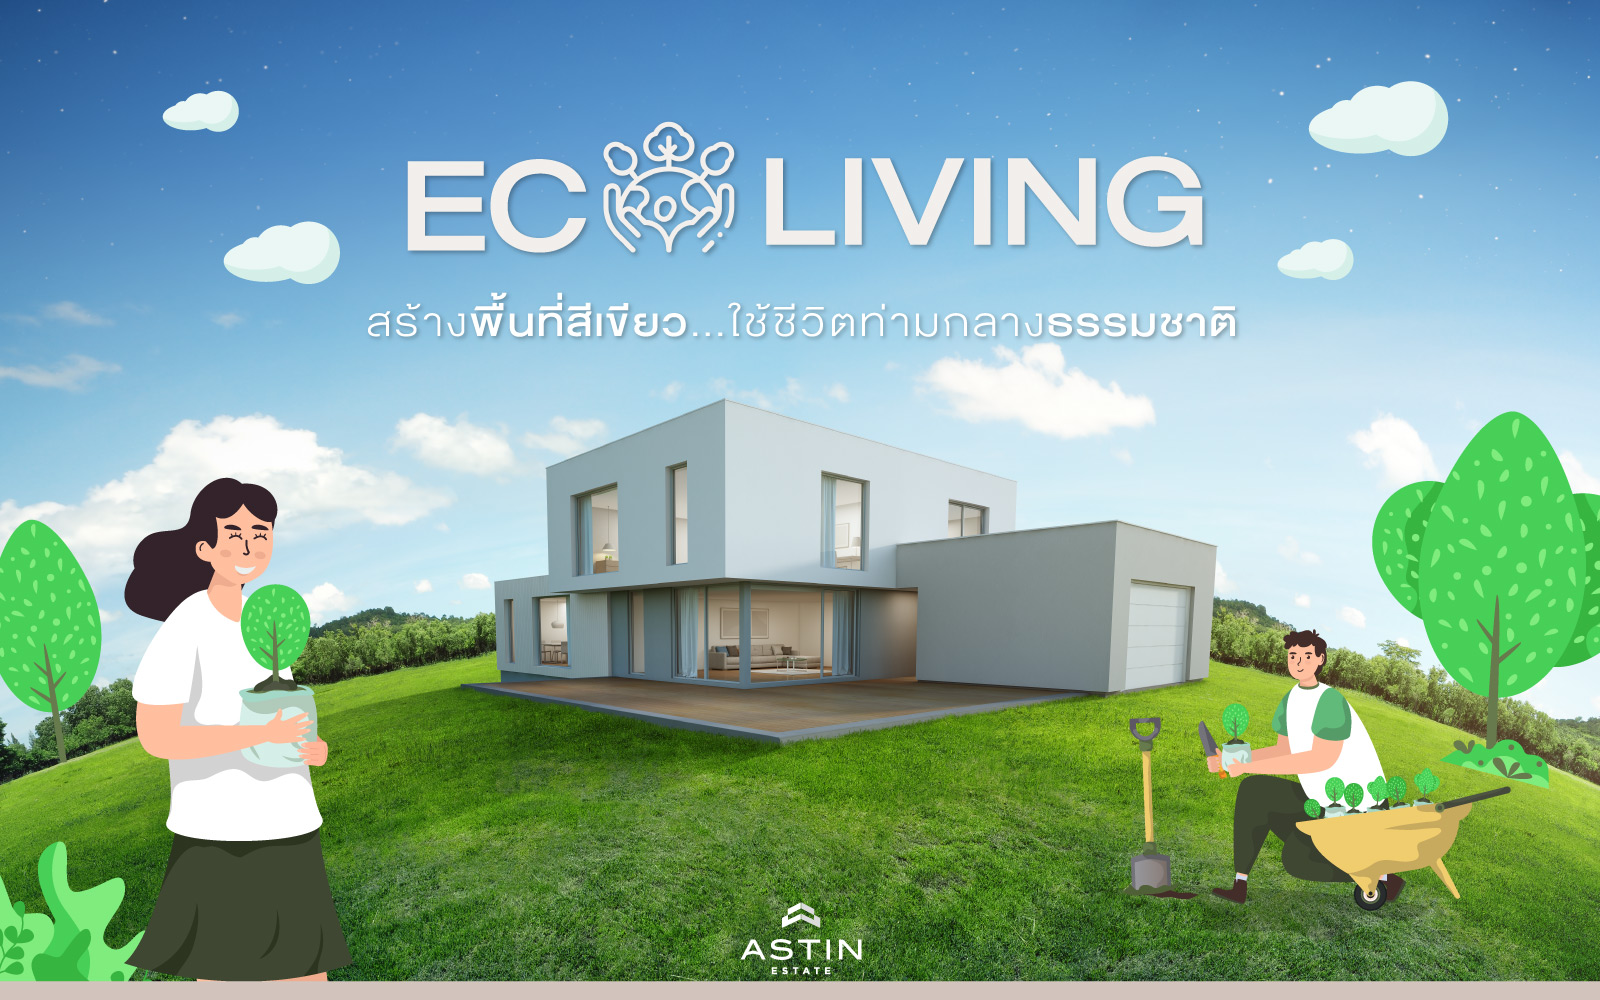 ‘ Eco Livng ’ สร้างพื้นที่สีเขียว…ใช้ชีวิตท่ามกลางธรรมชาติ